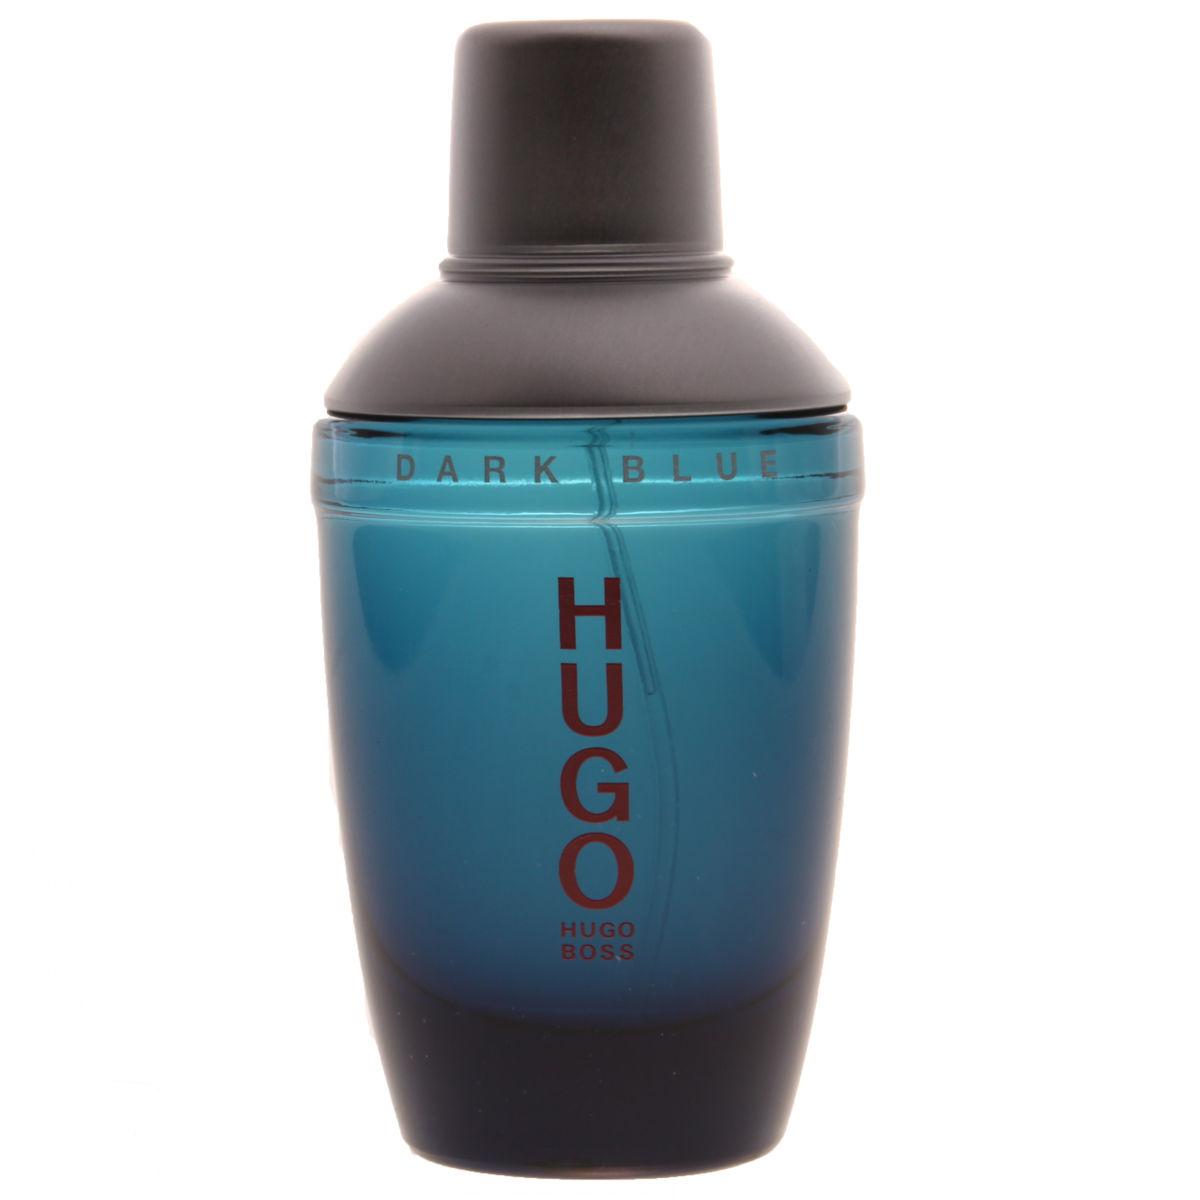 hugo boss dark blue price